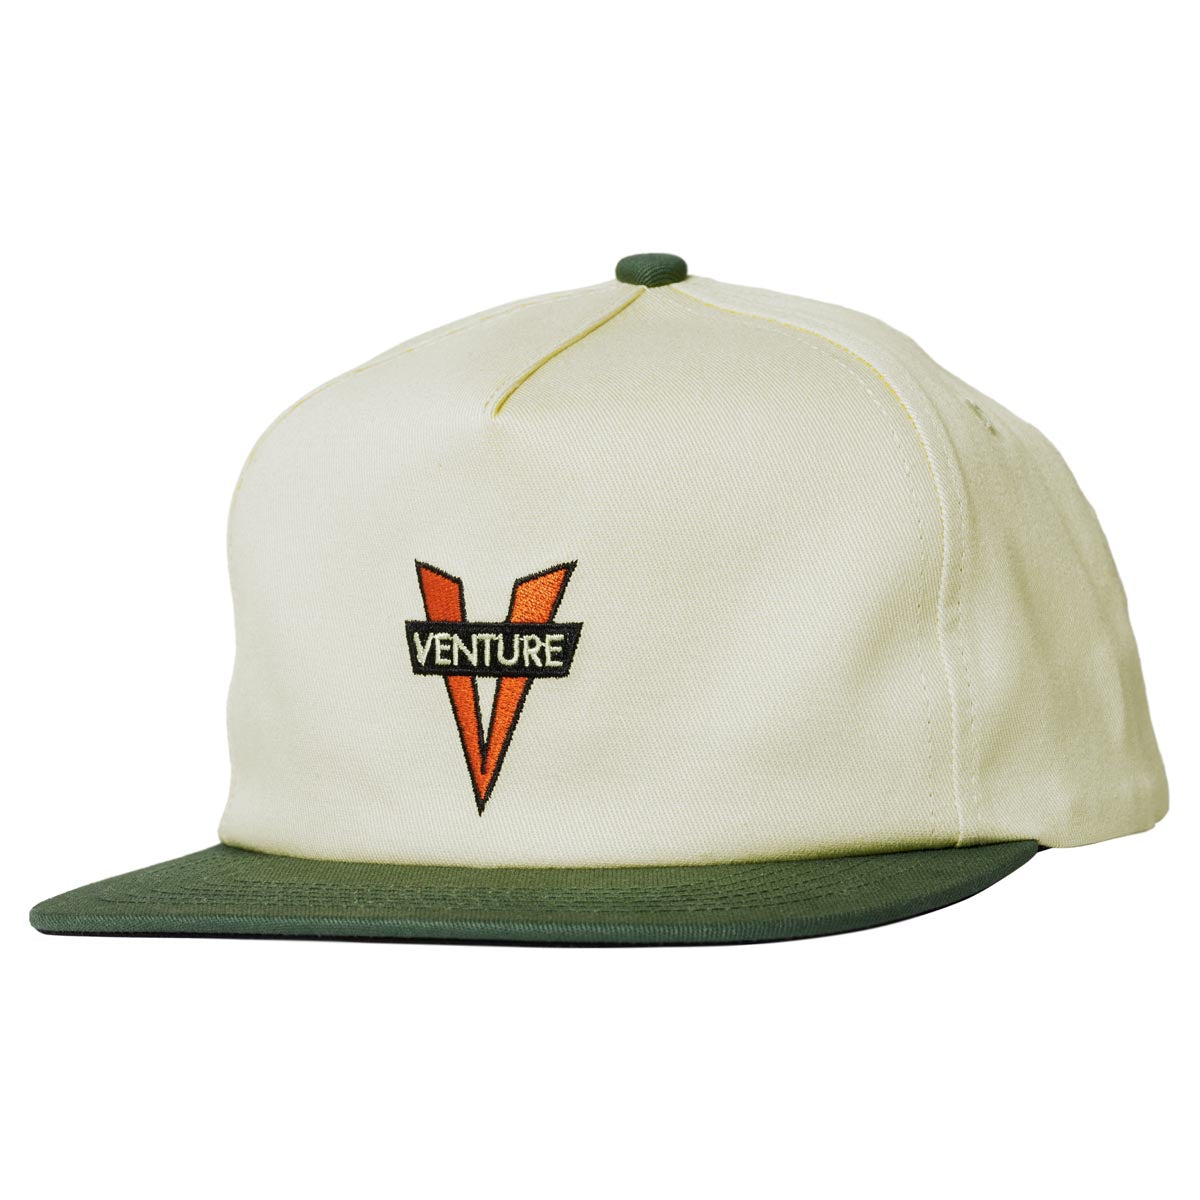 Venture Heritage Snapback Hat - White/Dark Green image 1